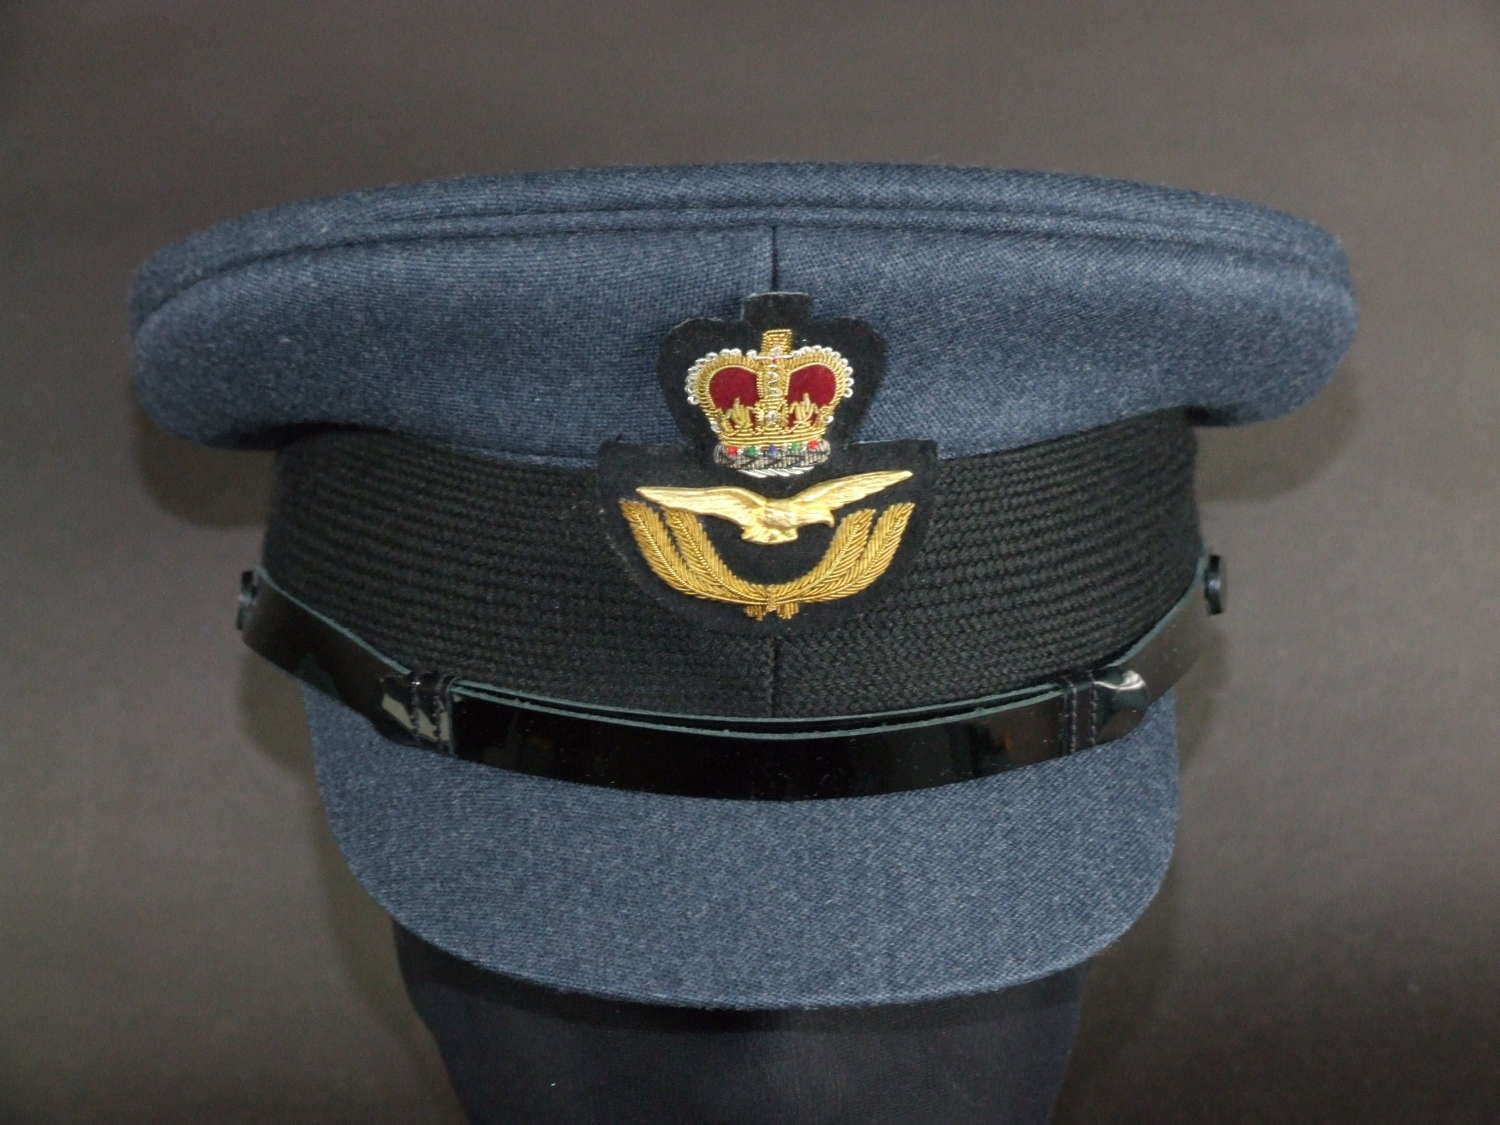 Queen's Crown RAF Officer's Service Dress Cap. 58